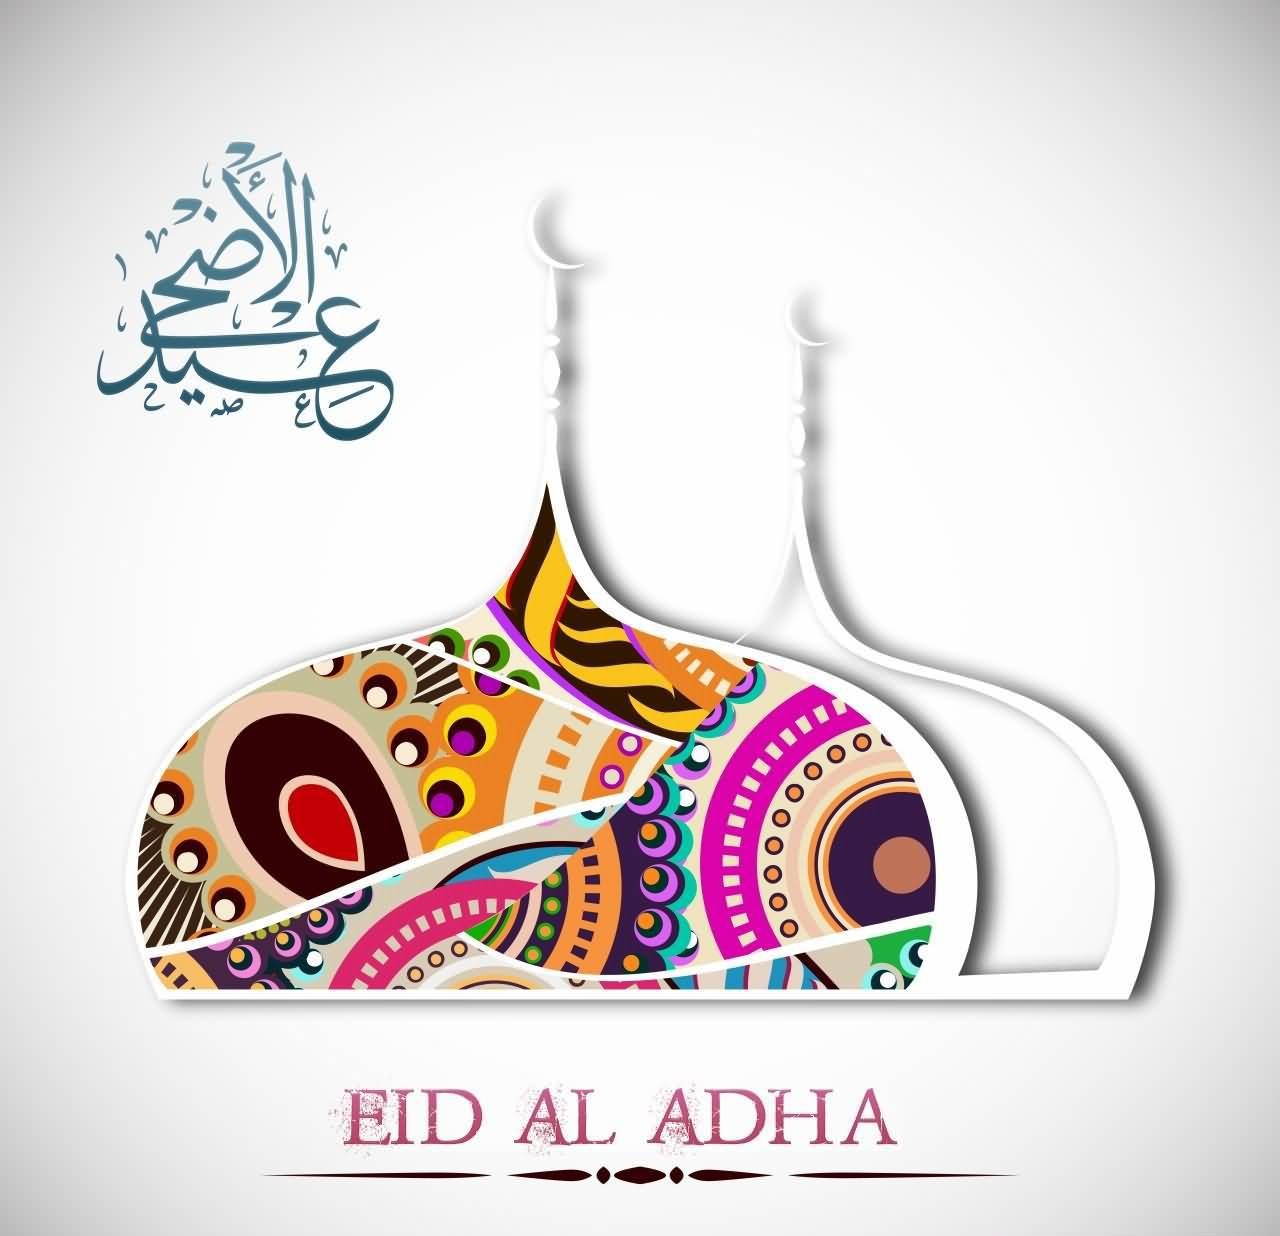 Eid Al Adha Card Design Image